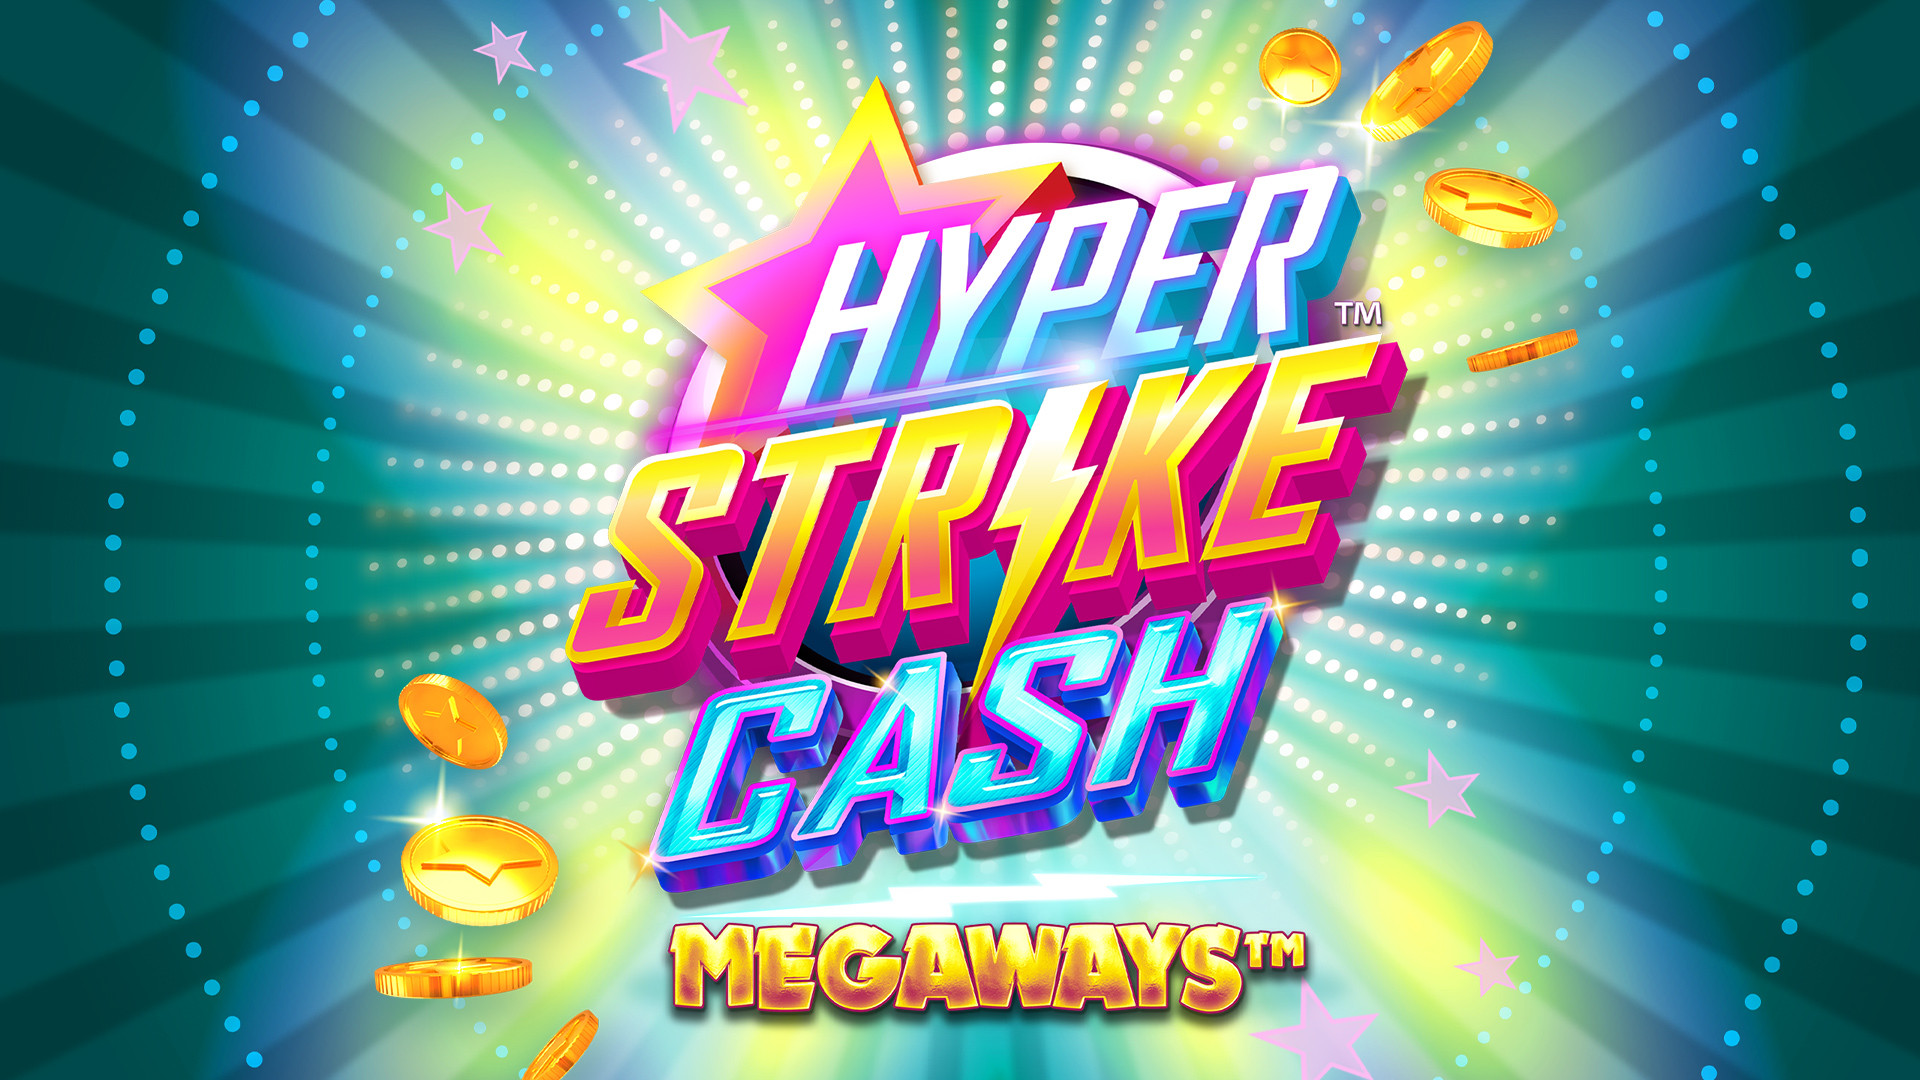 Hyper Strike CASH MEGAWAYS